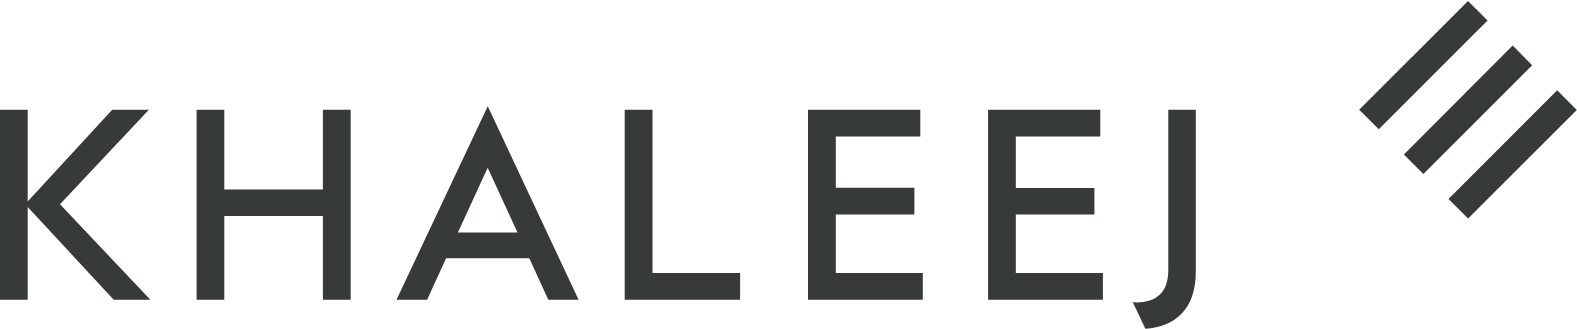 Khaleeji Bank logo large (transparent PNG)